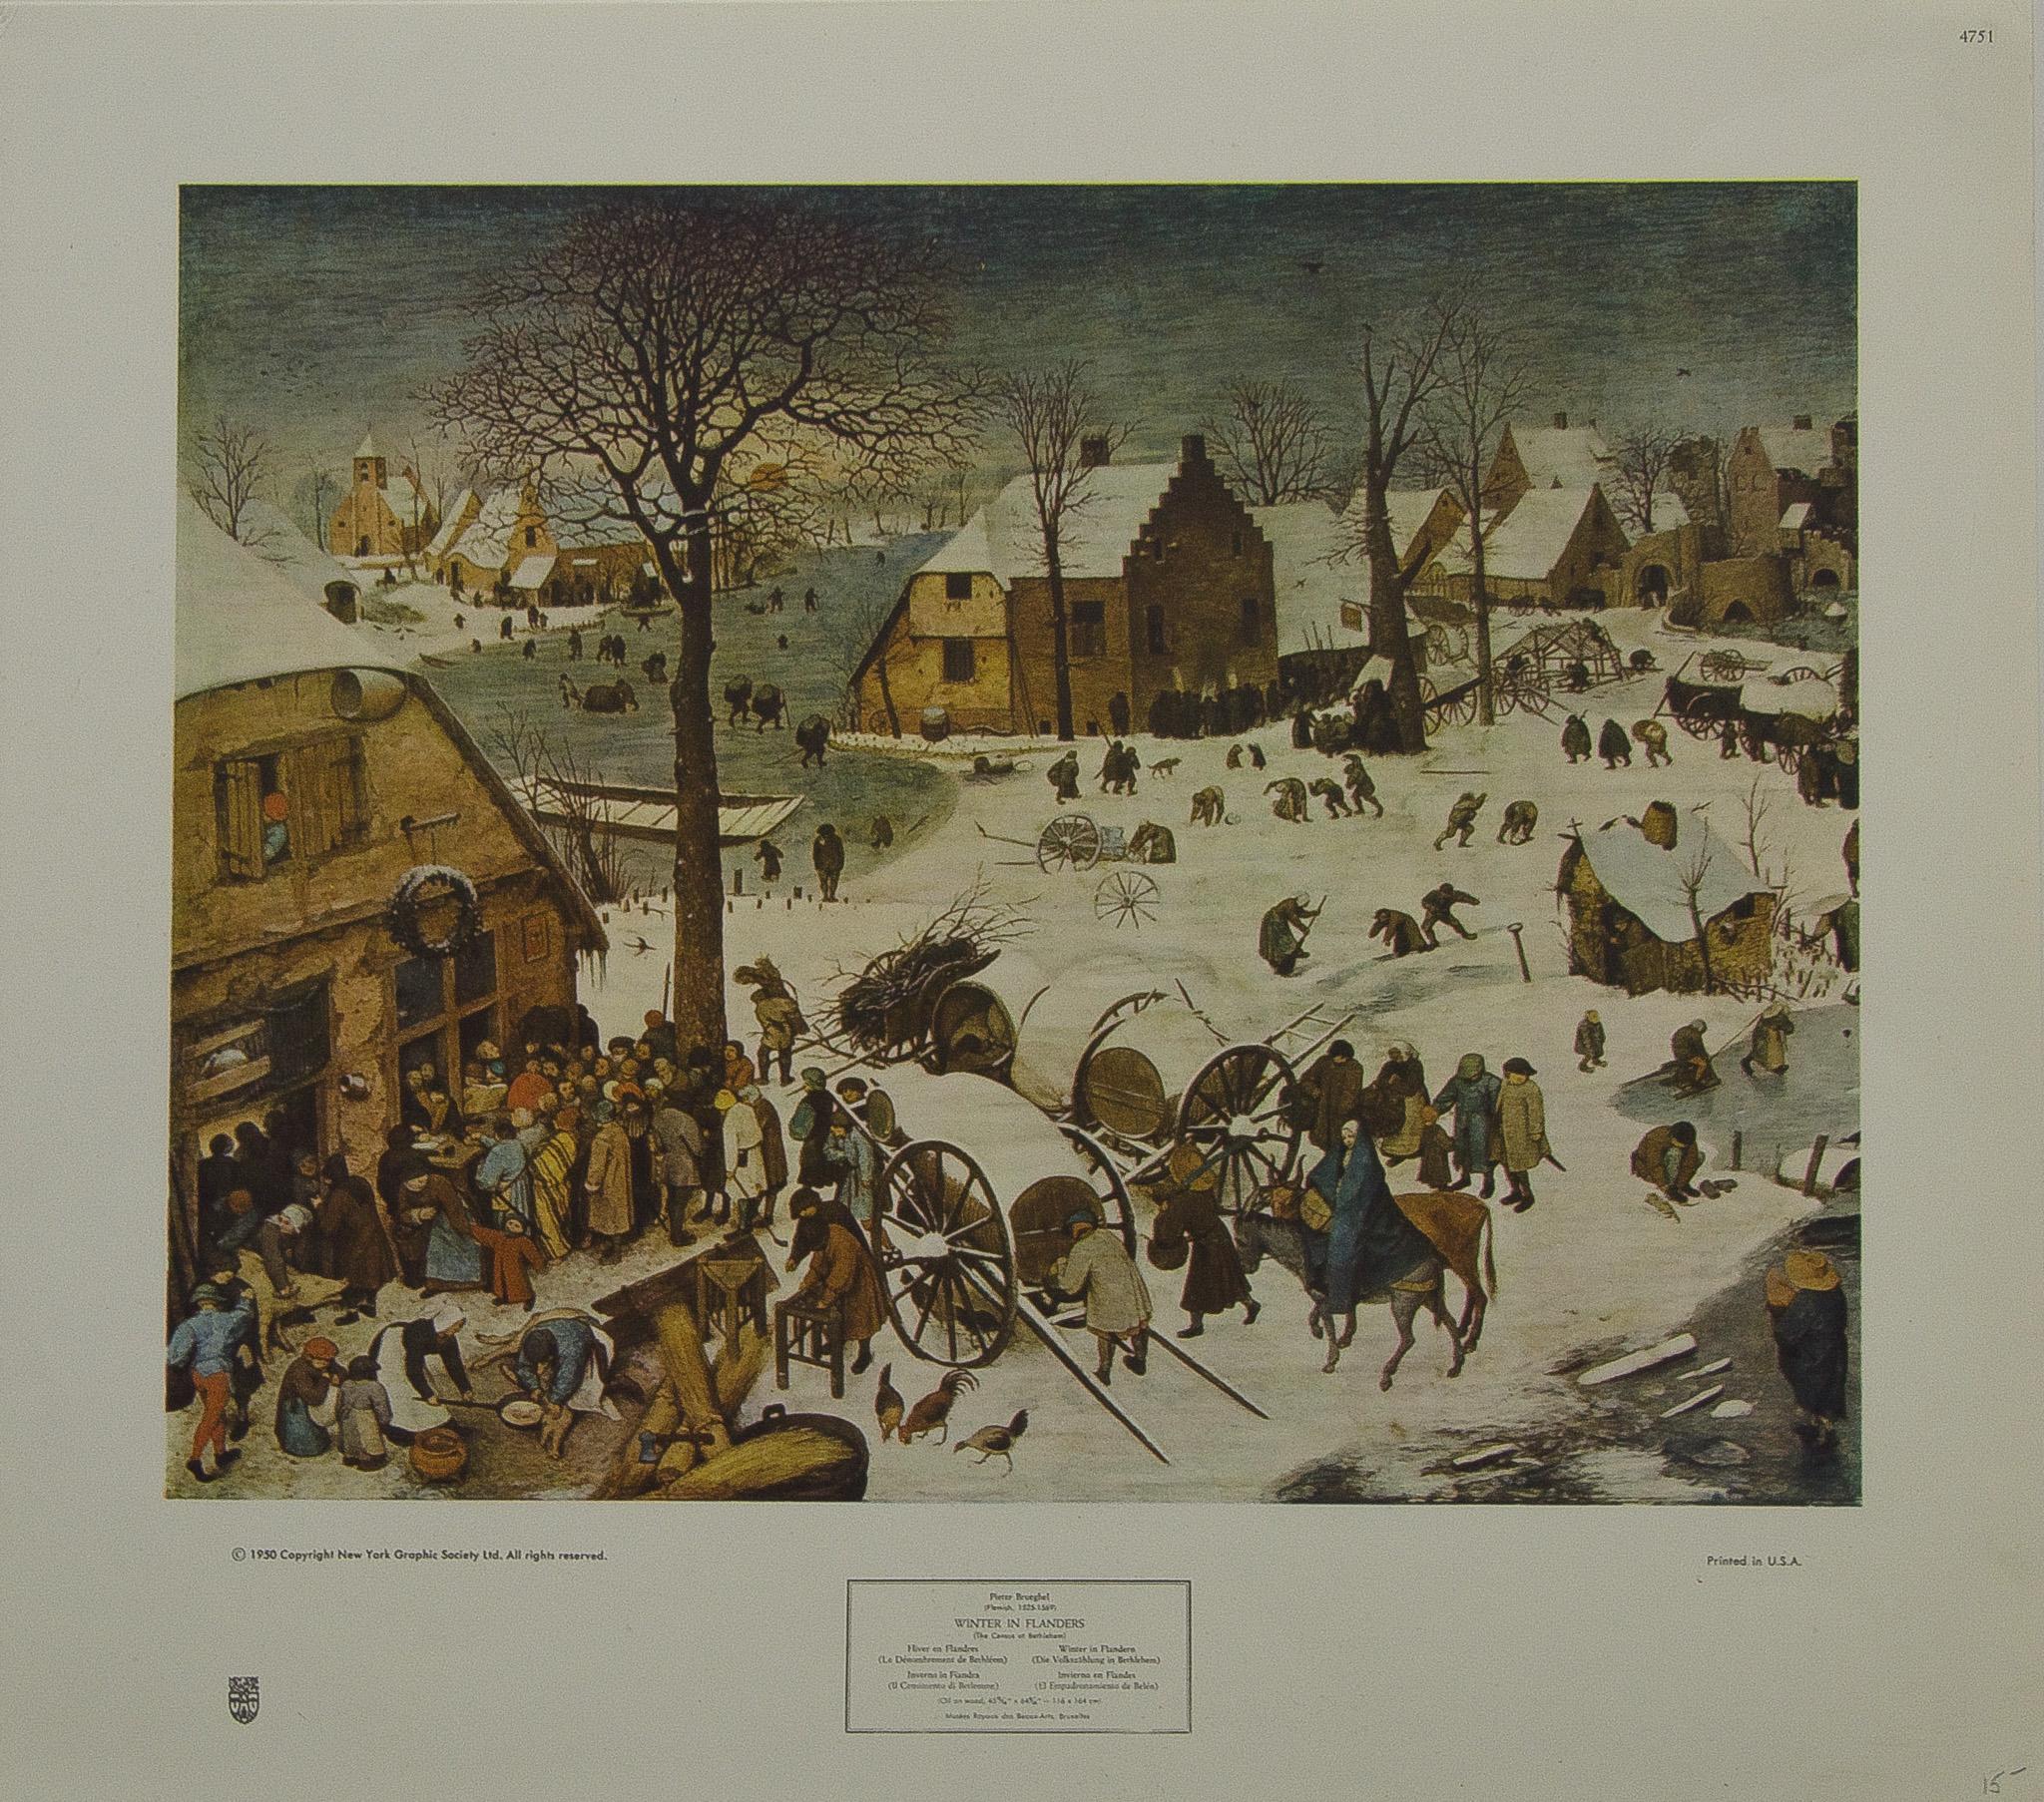 Pieter Bruegel Landscape Print - "Winter in Flanders" by Pieter Brueghel, Limited Edition Litho, Printed in USA. 